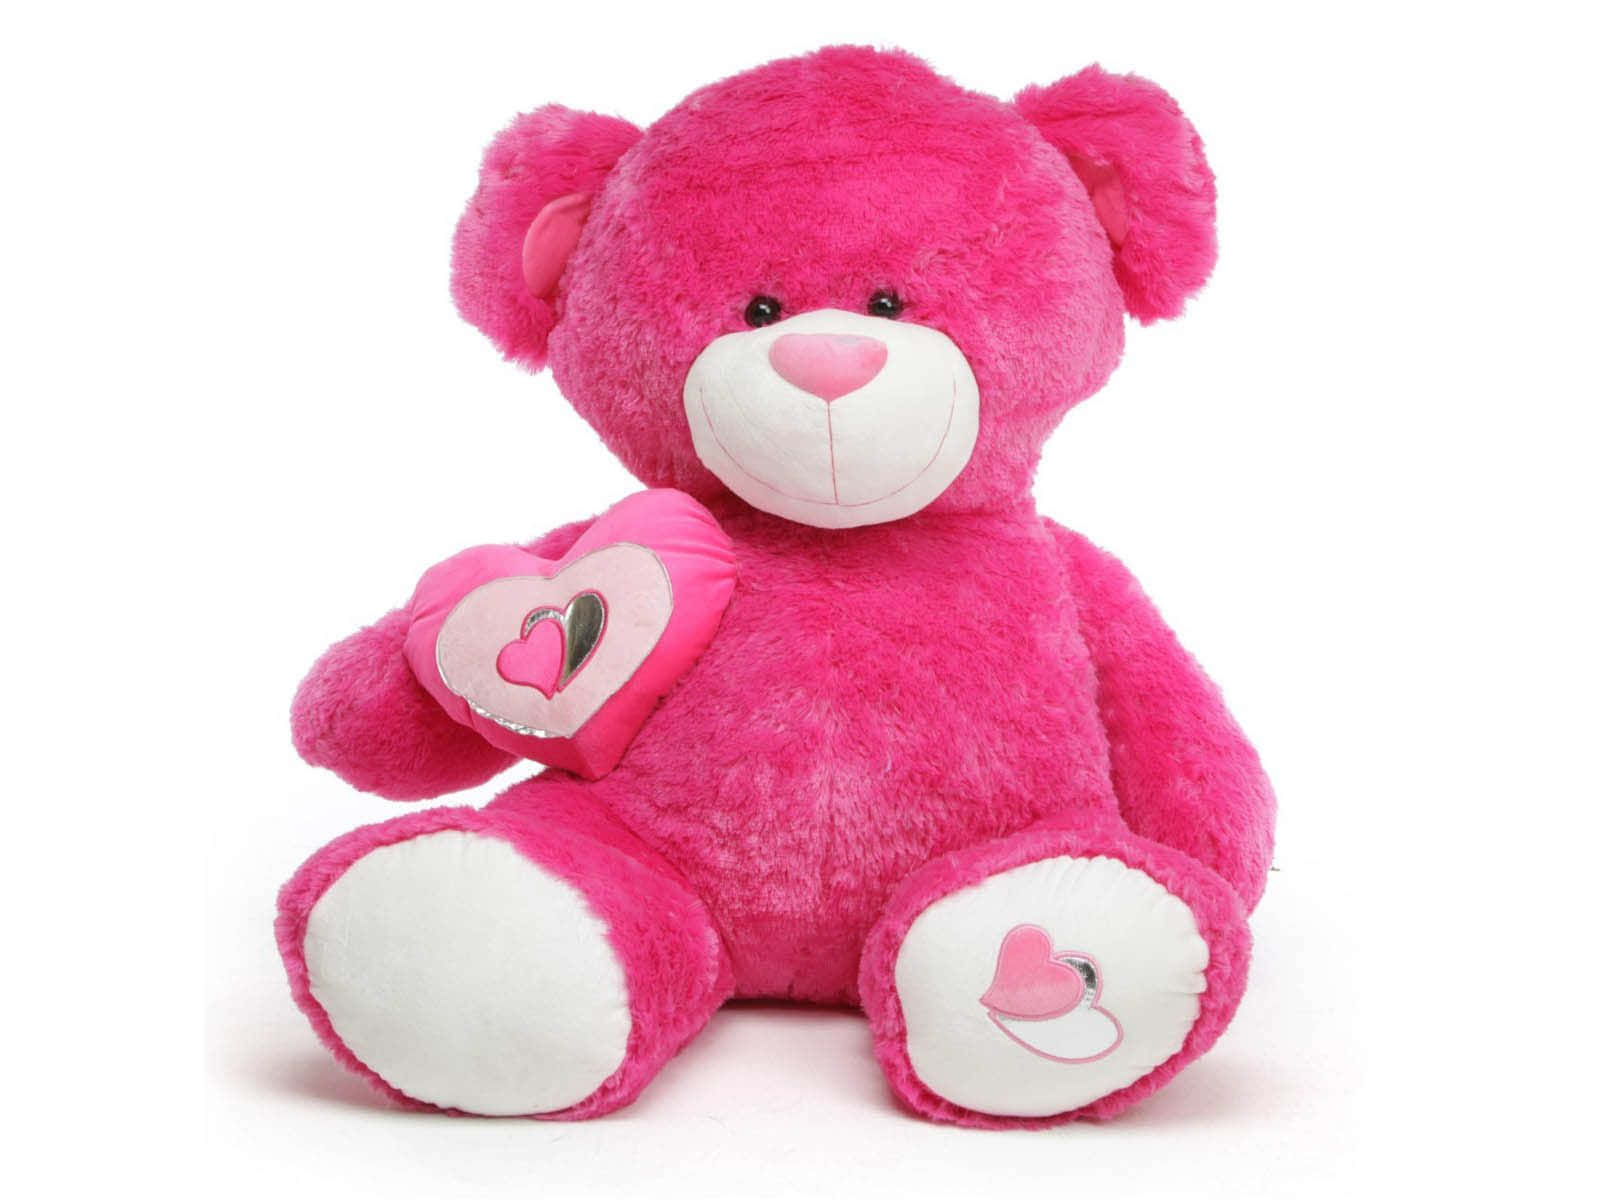 Cute Pink Teddy Bear Love Background